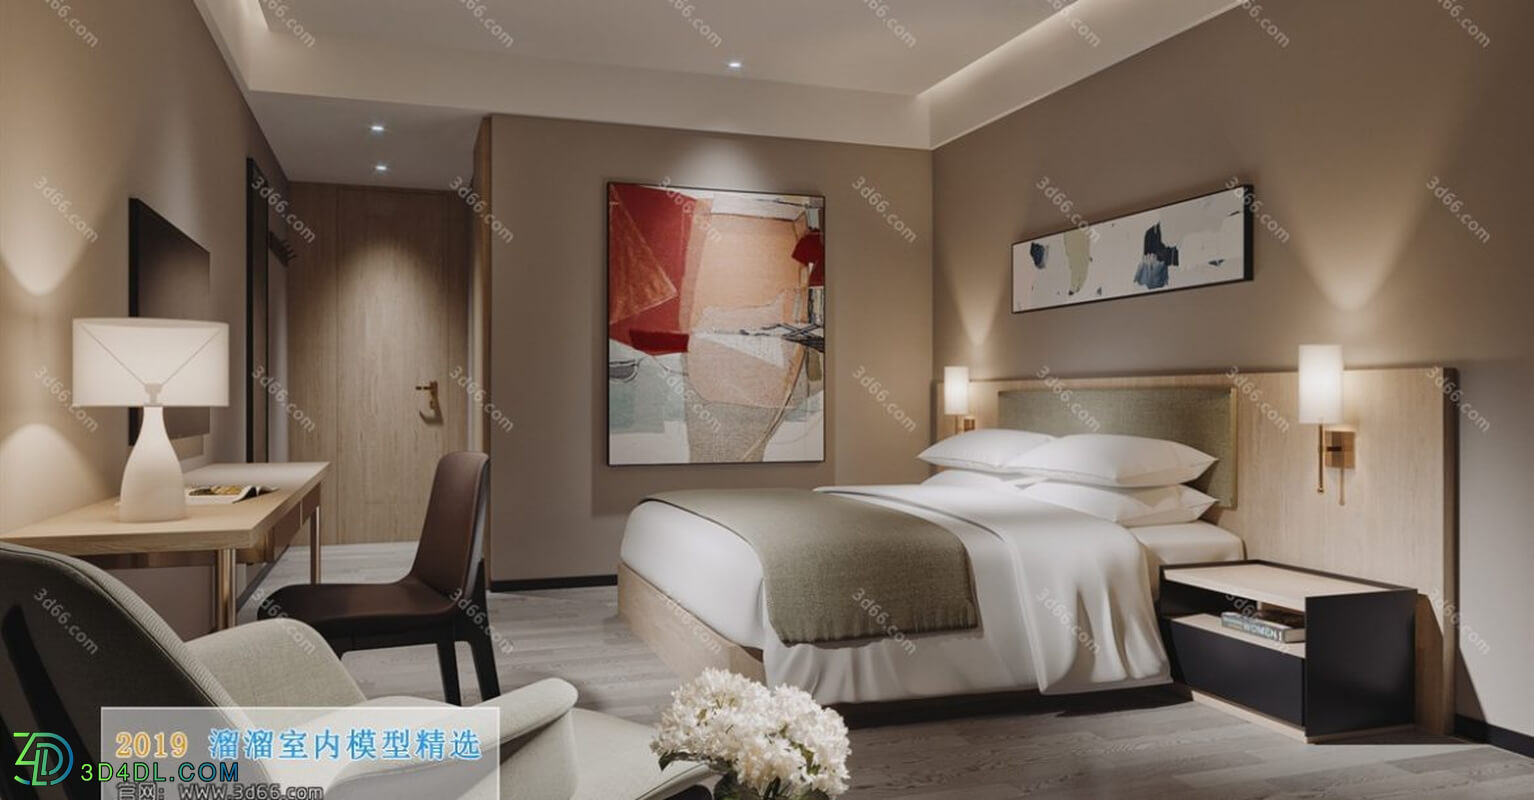 3D66 2019 Hotel Suite (004)